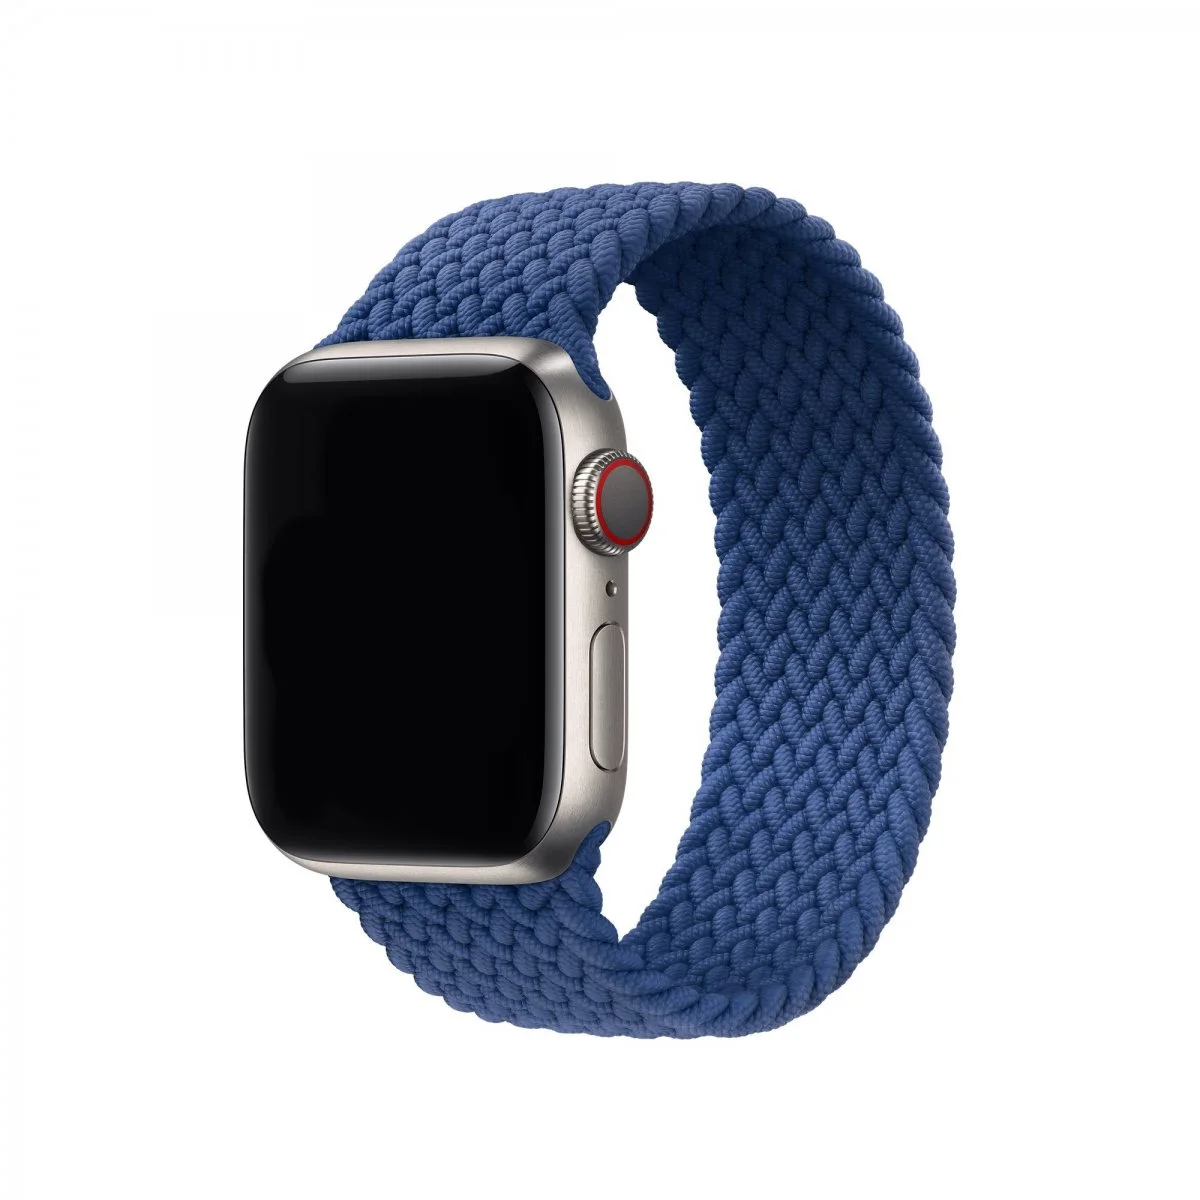 Řemínek iMore Braided Solo Loop Apple Watch Series 1/2/3 38mm - atlanticky modrý (XS)